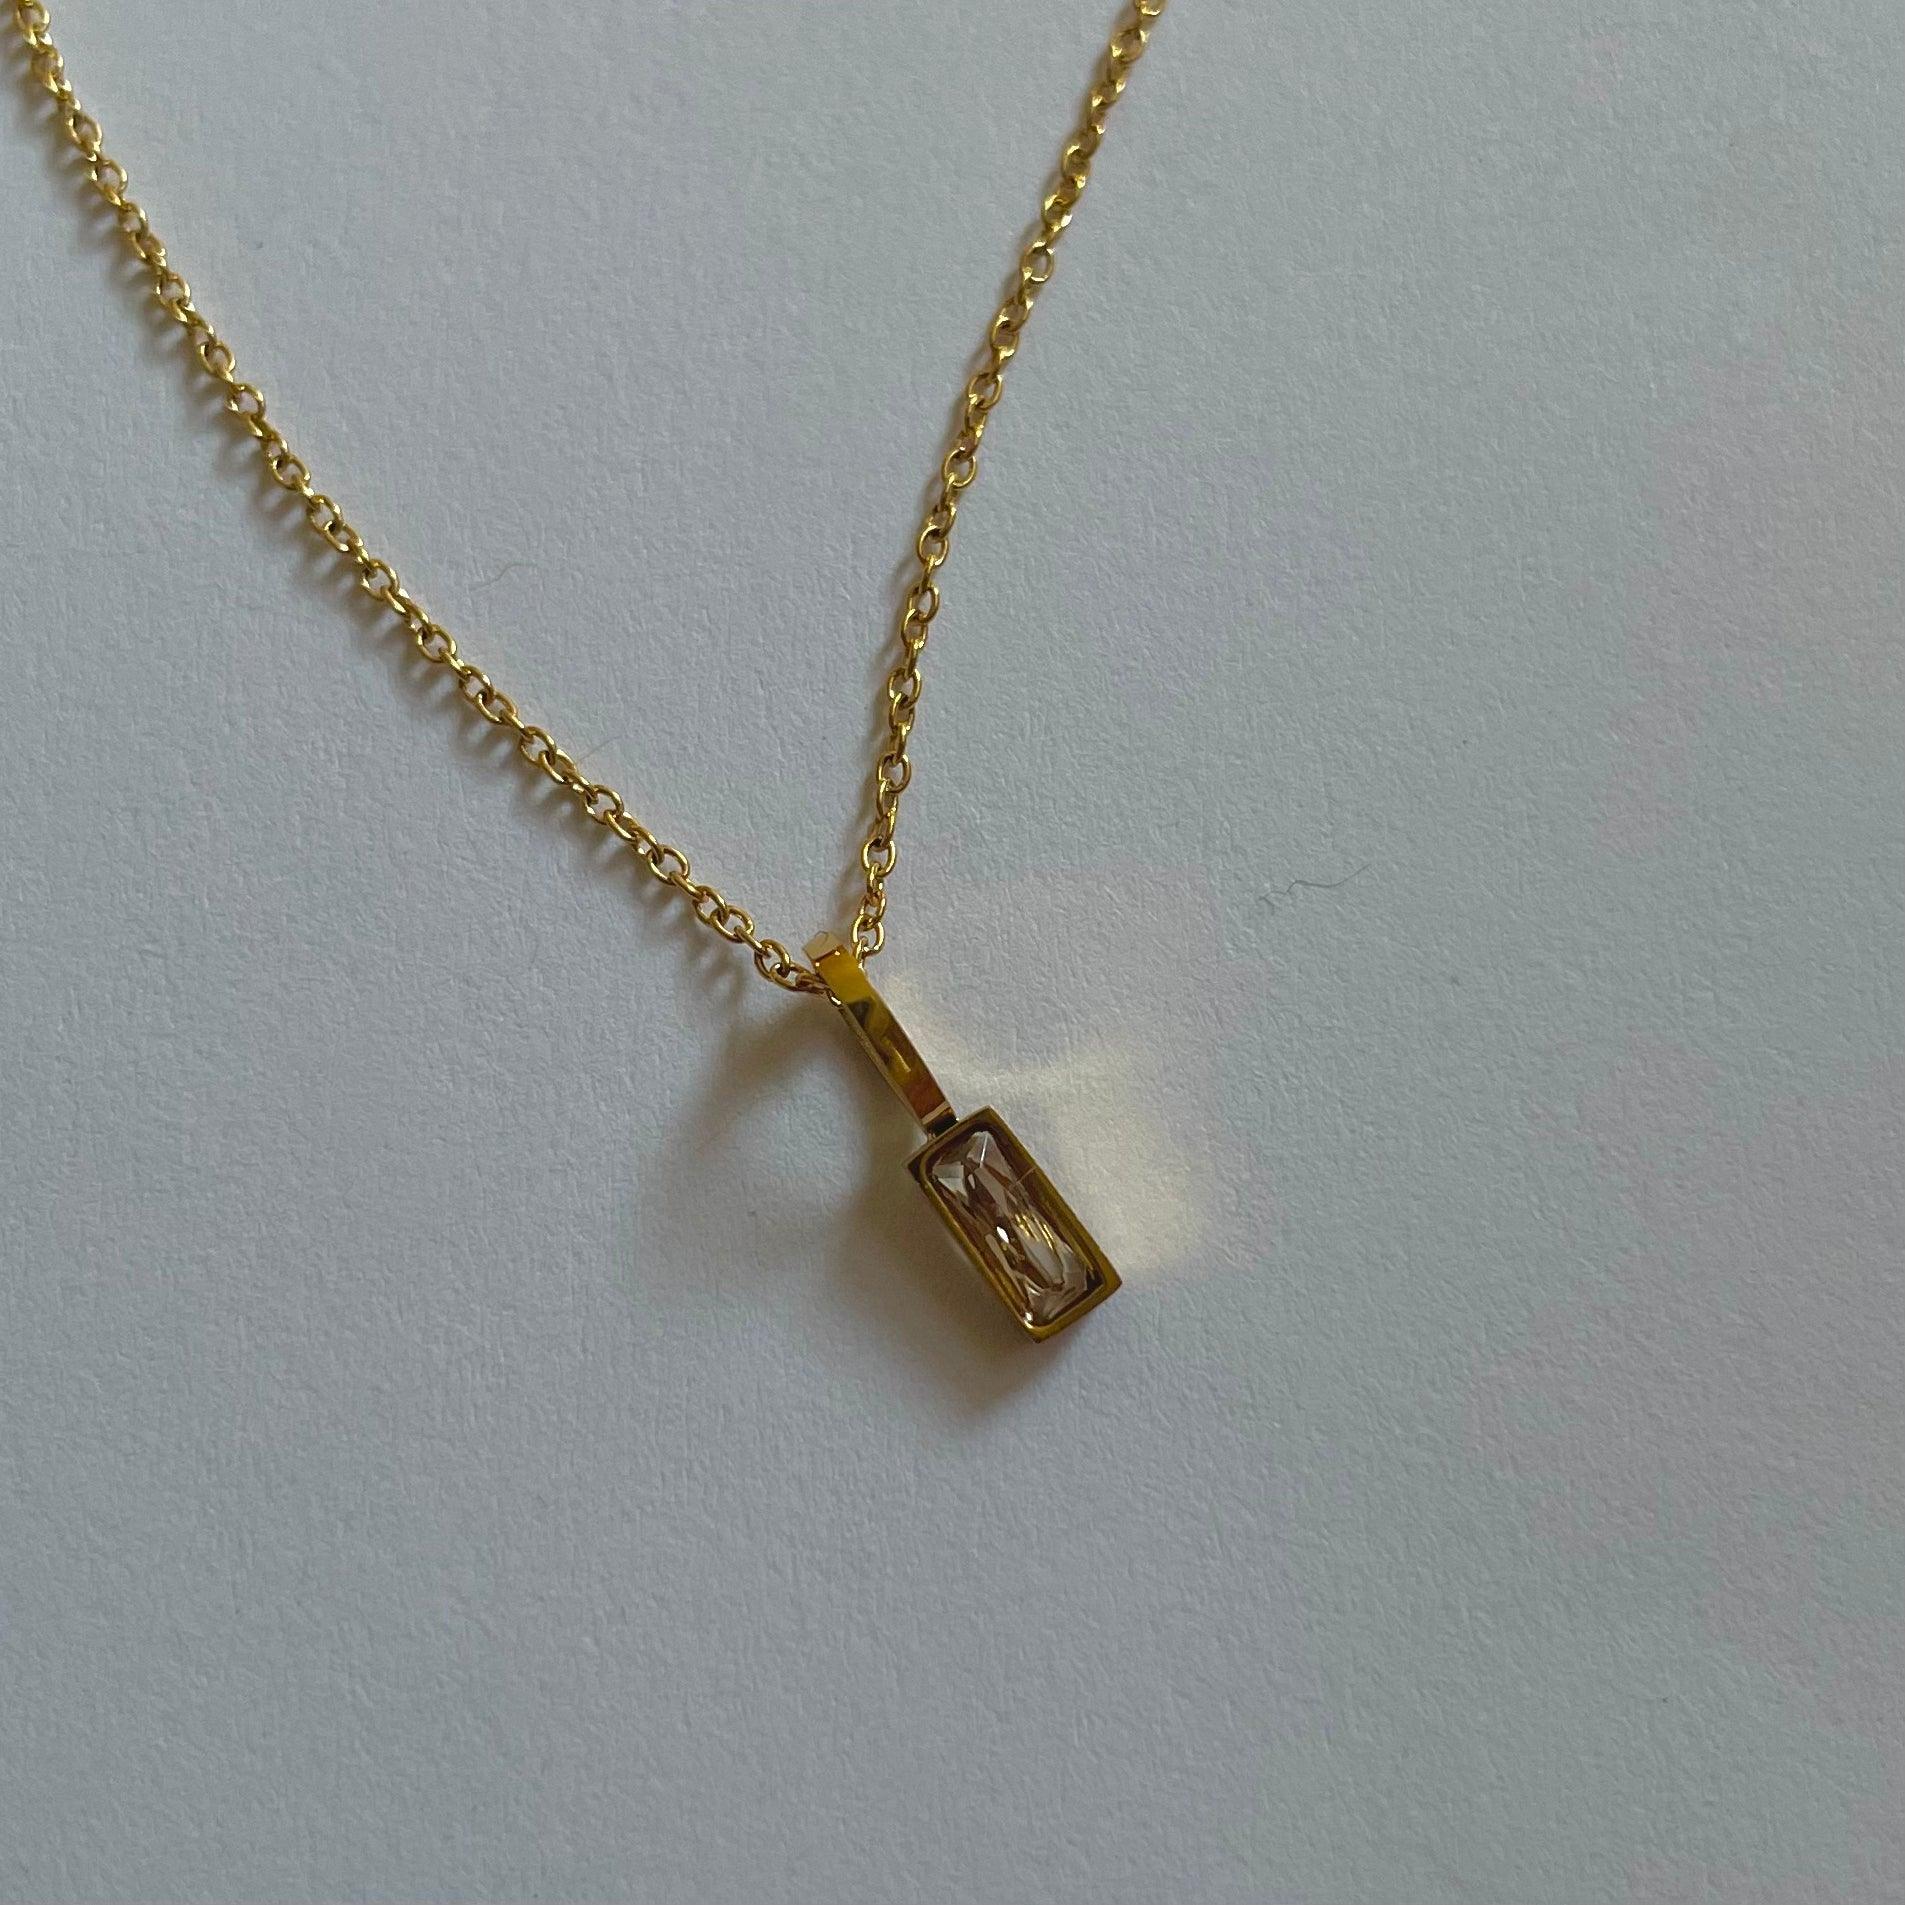 Birthstone Charm Necklace - 18k Gold PVD - The Smart Minimalist